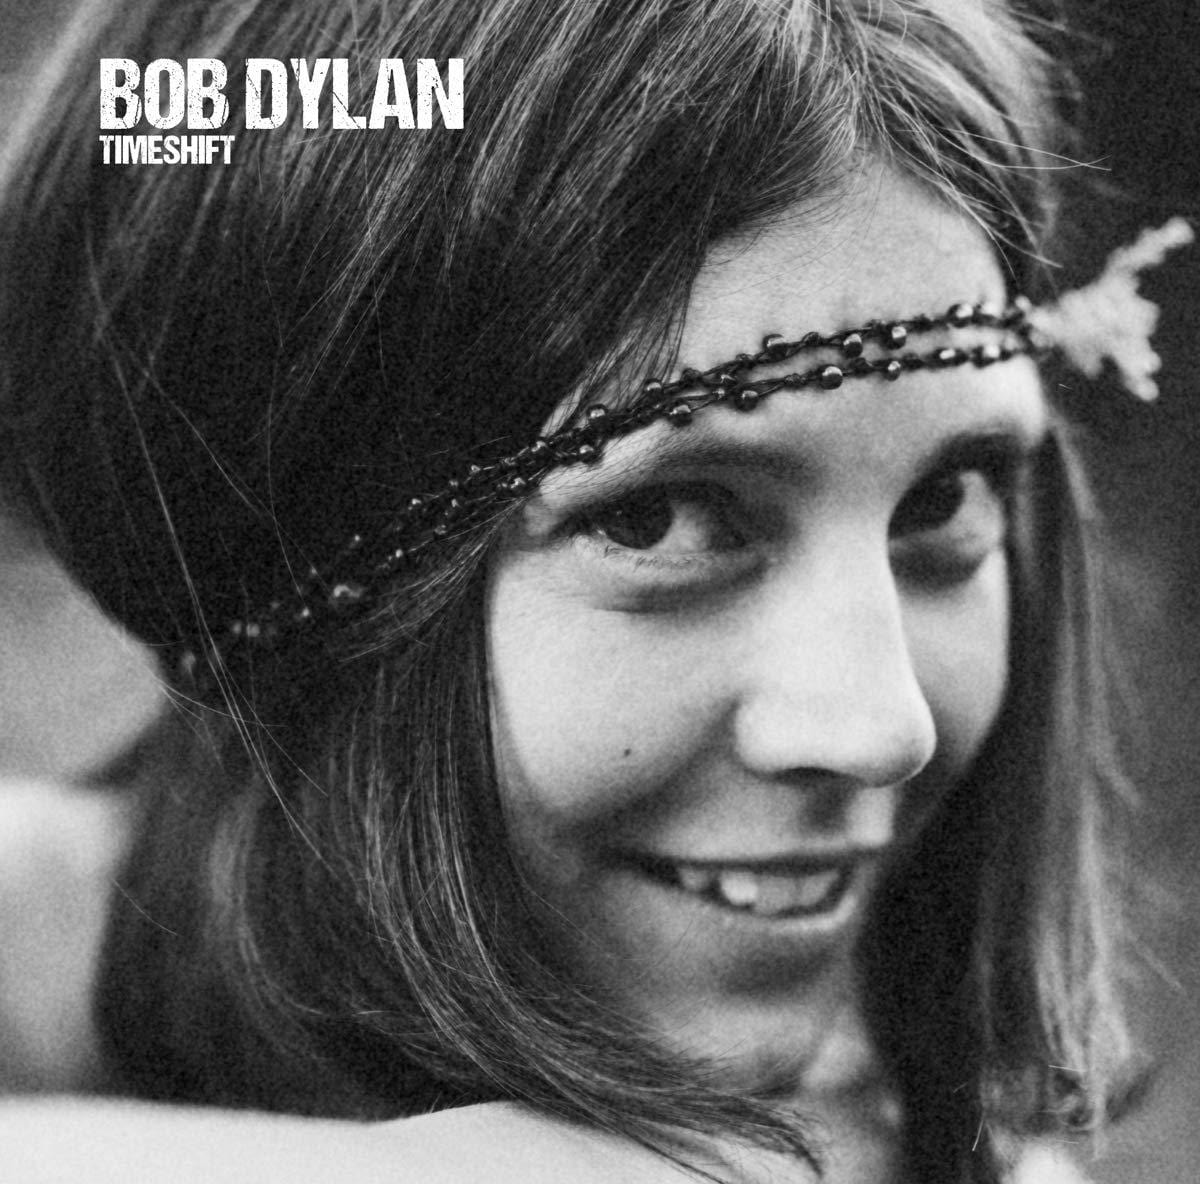 Time Shift: - Bob Dylan [Vinyl]